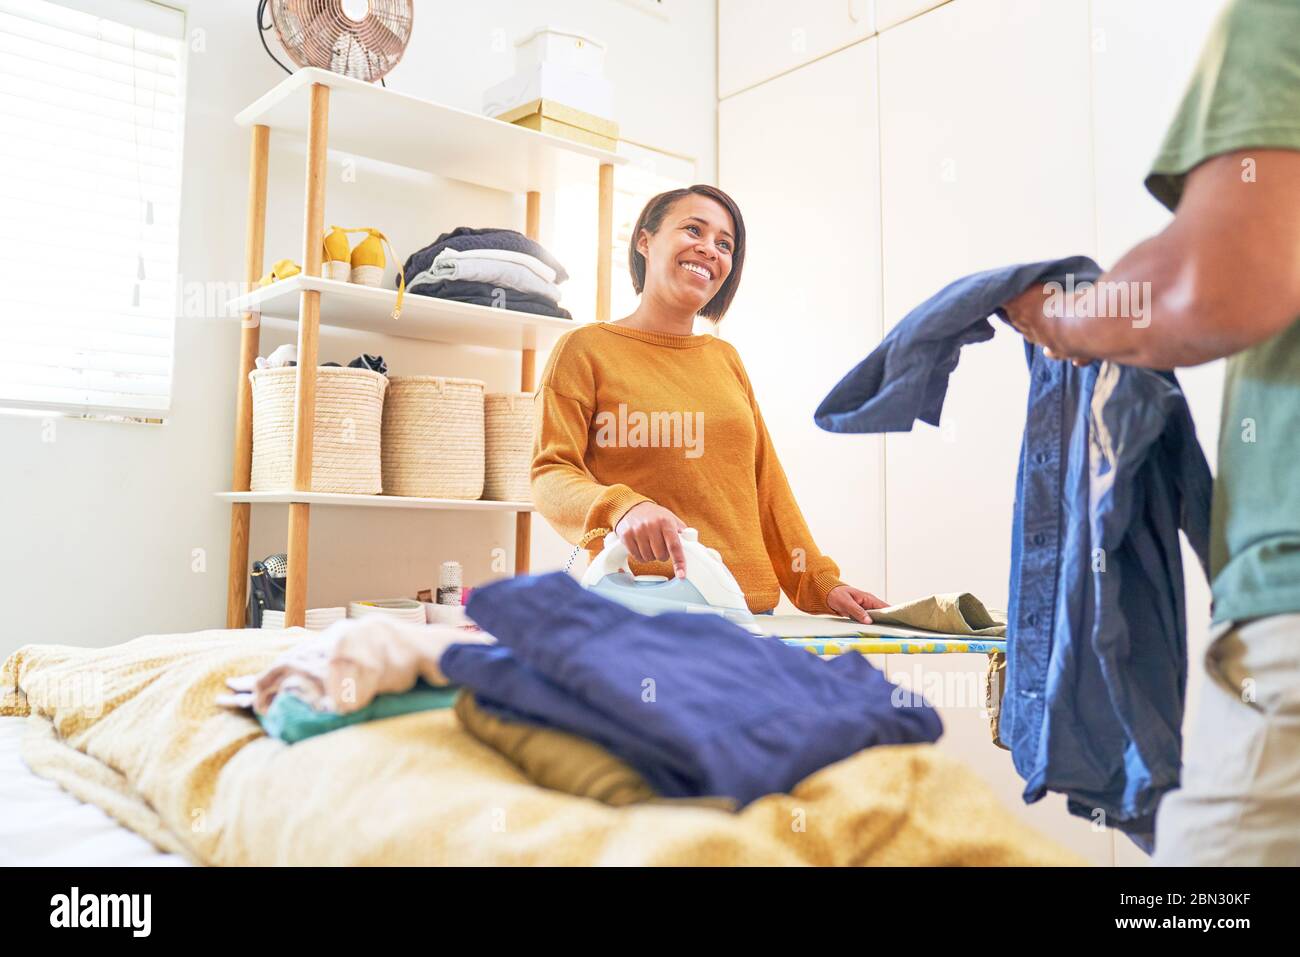 Happy woman ironing laundry and talking to husband Stock Photo